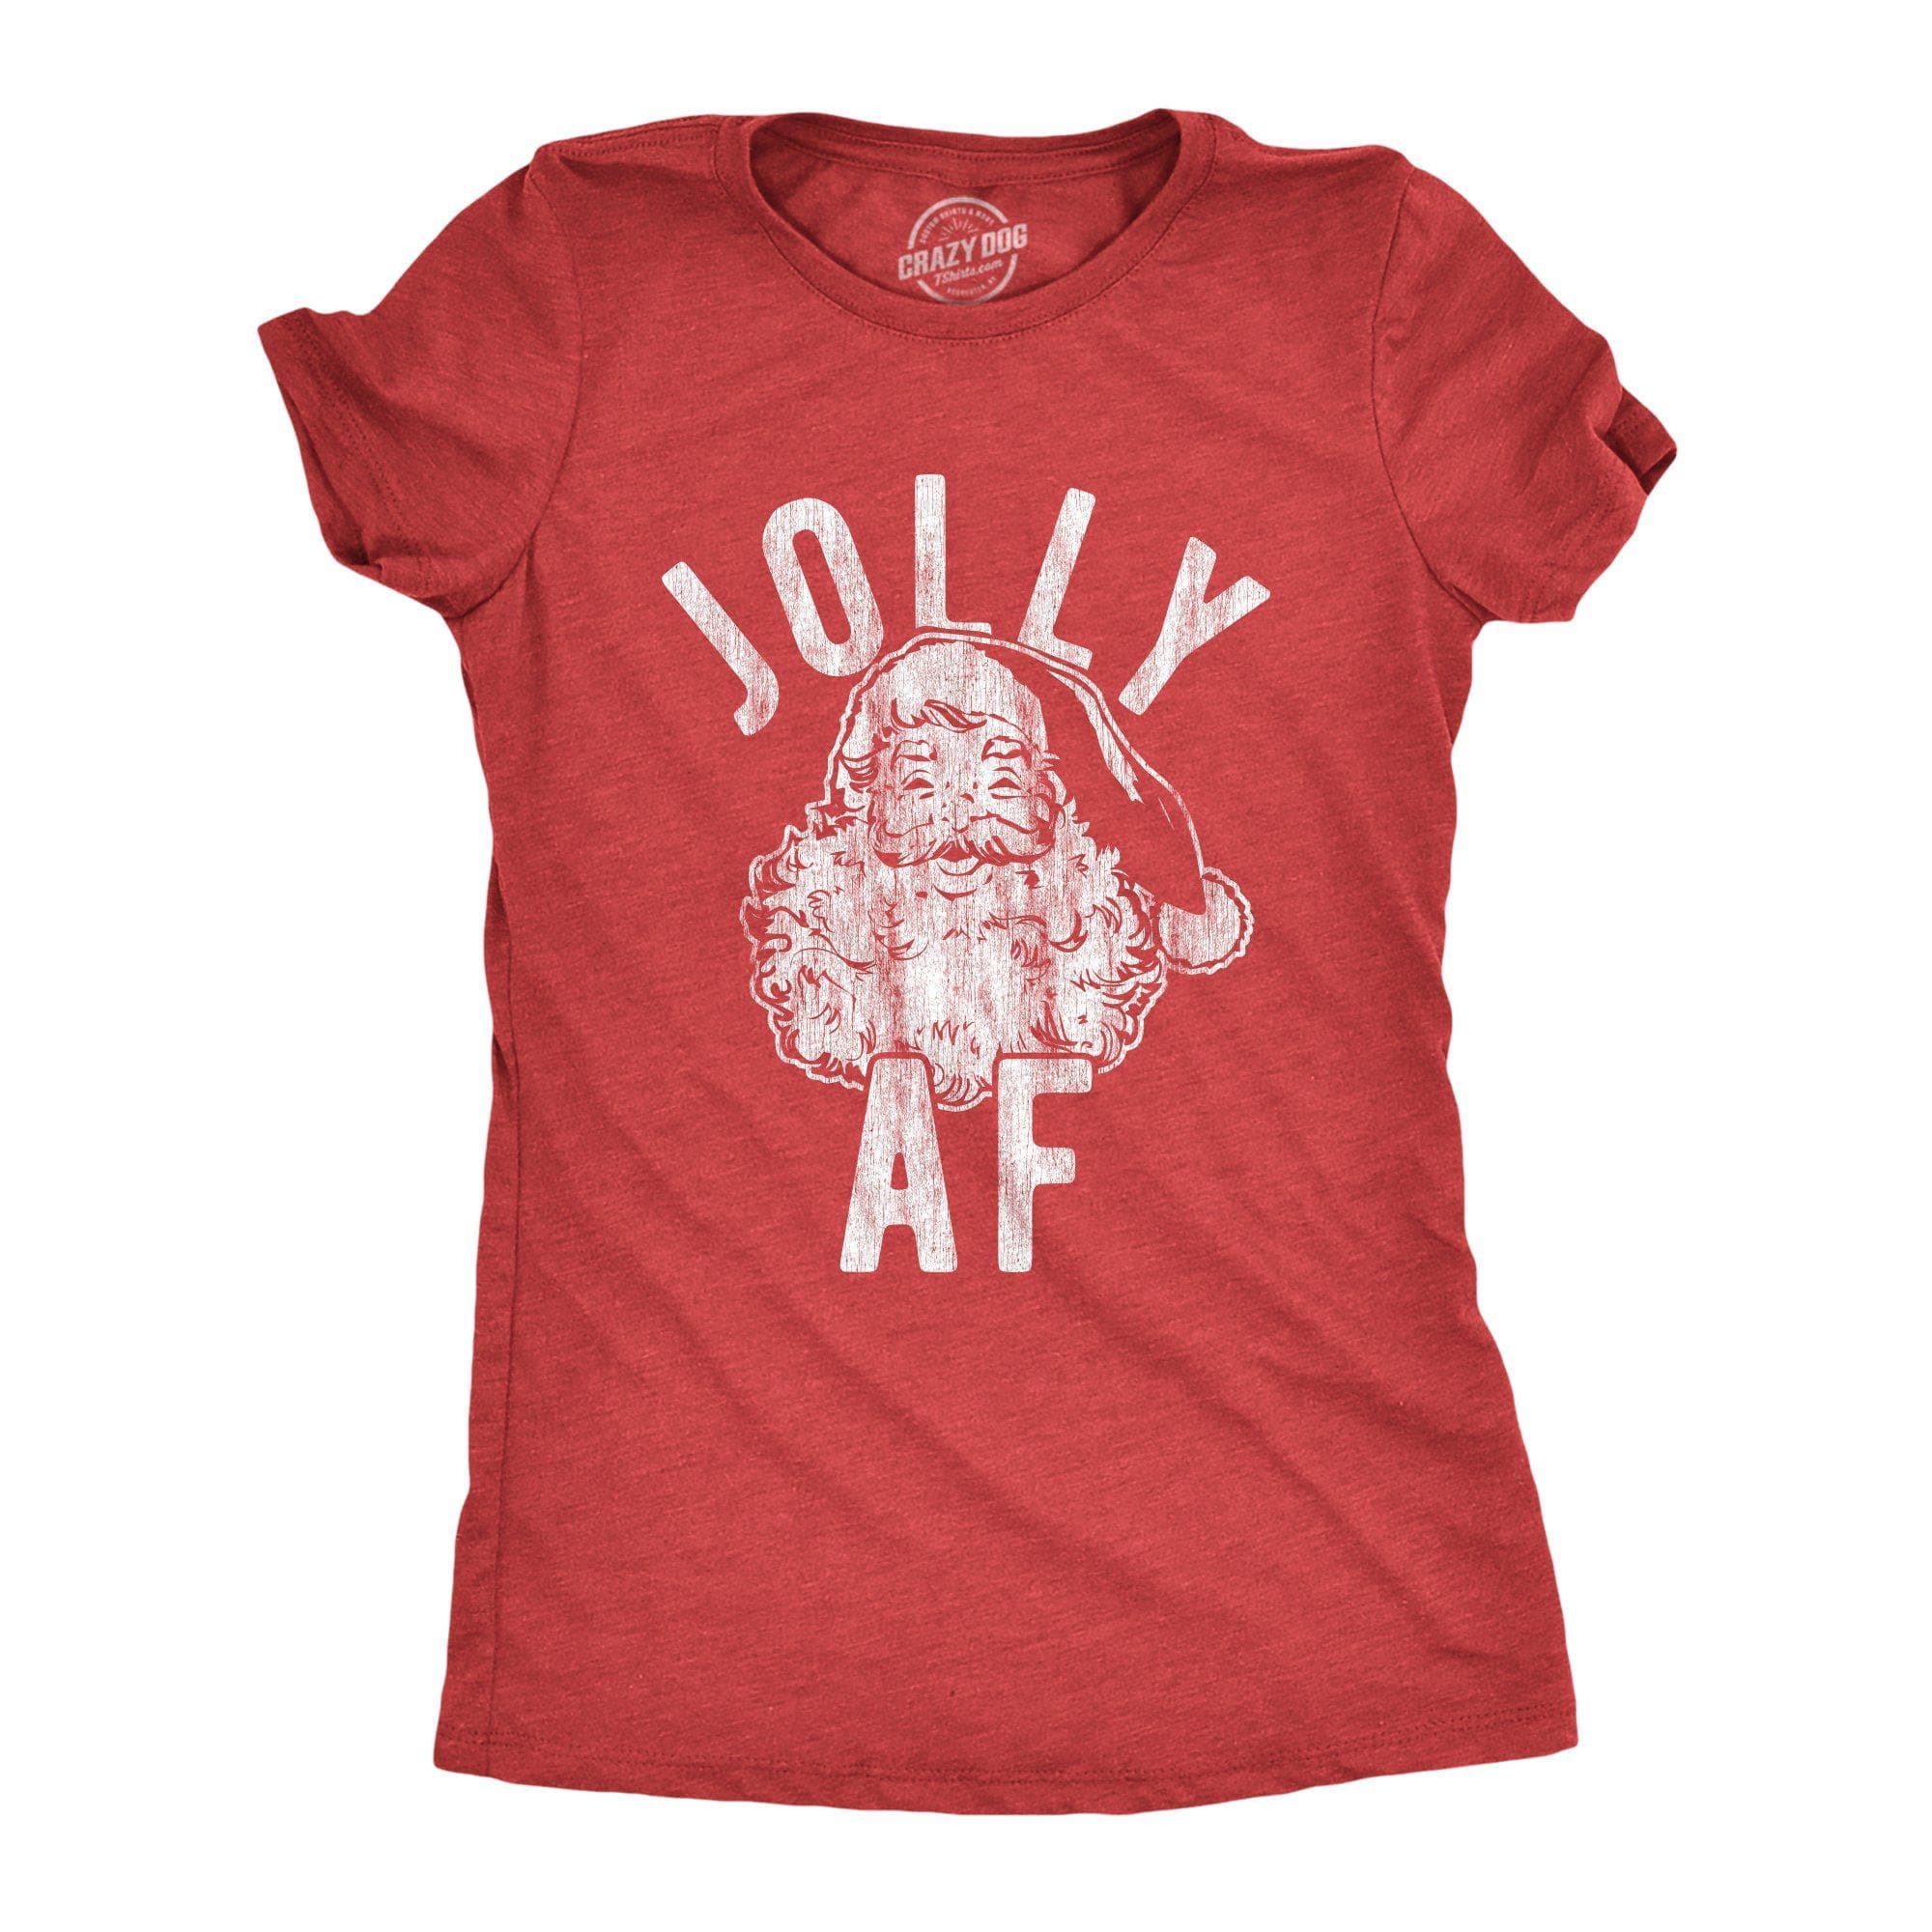 Jolly AF Women's Tshirt - Crazy Dog T-Shirts